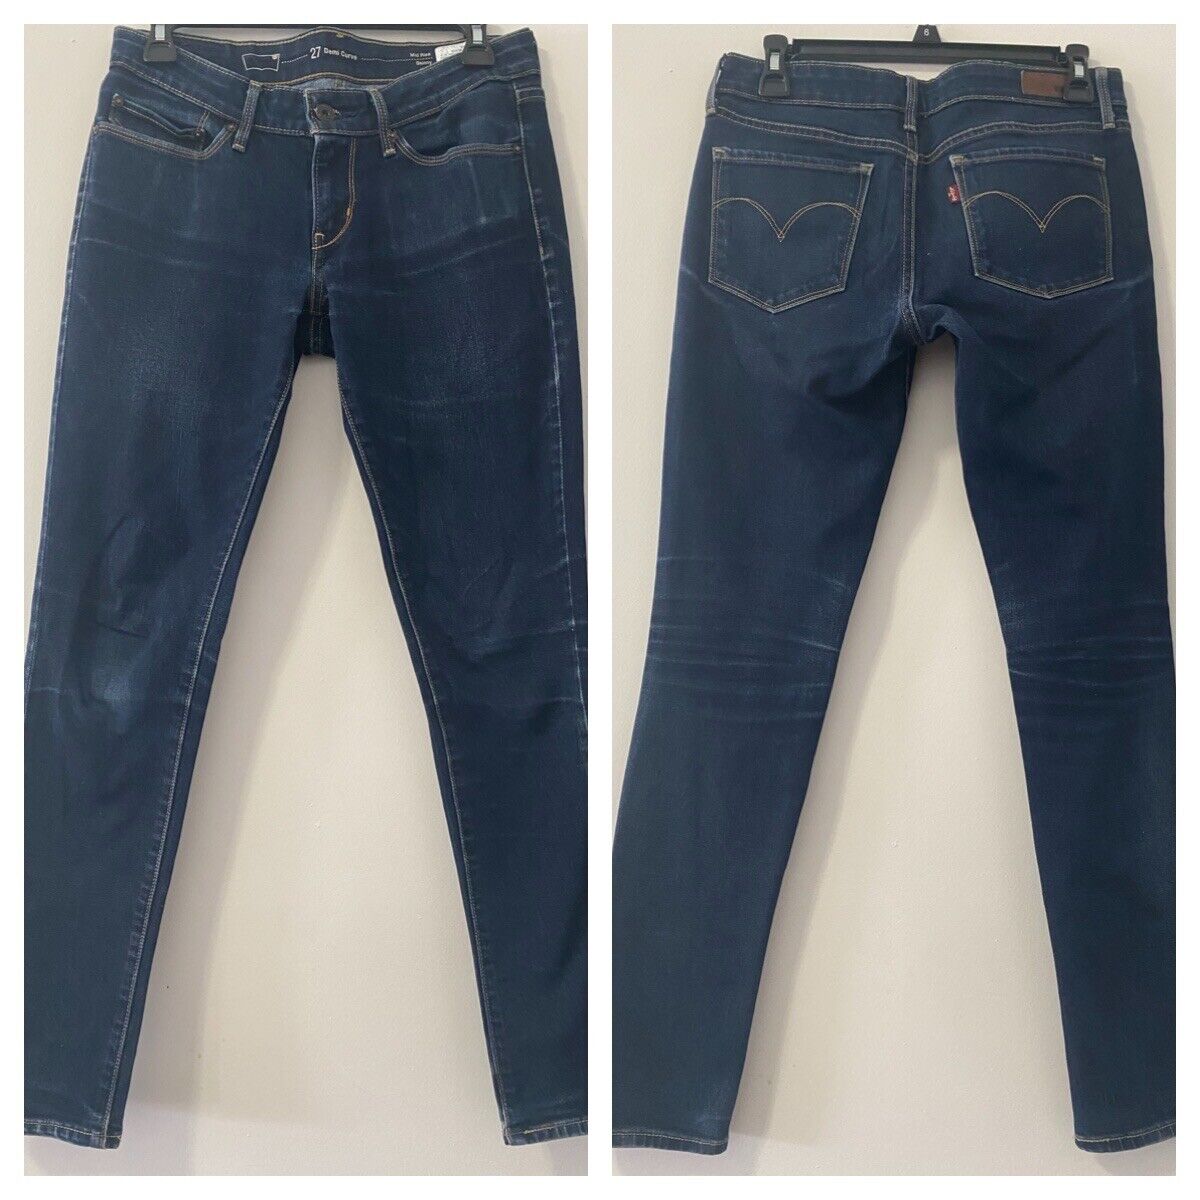 Levi's Demi Curve Skinny Jeans Rise Size 27 | eBay